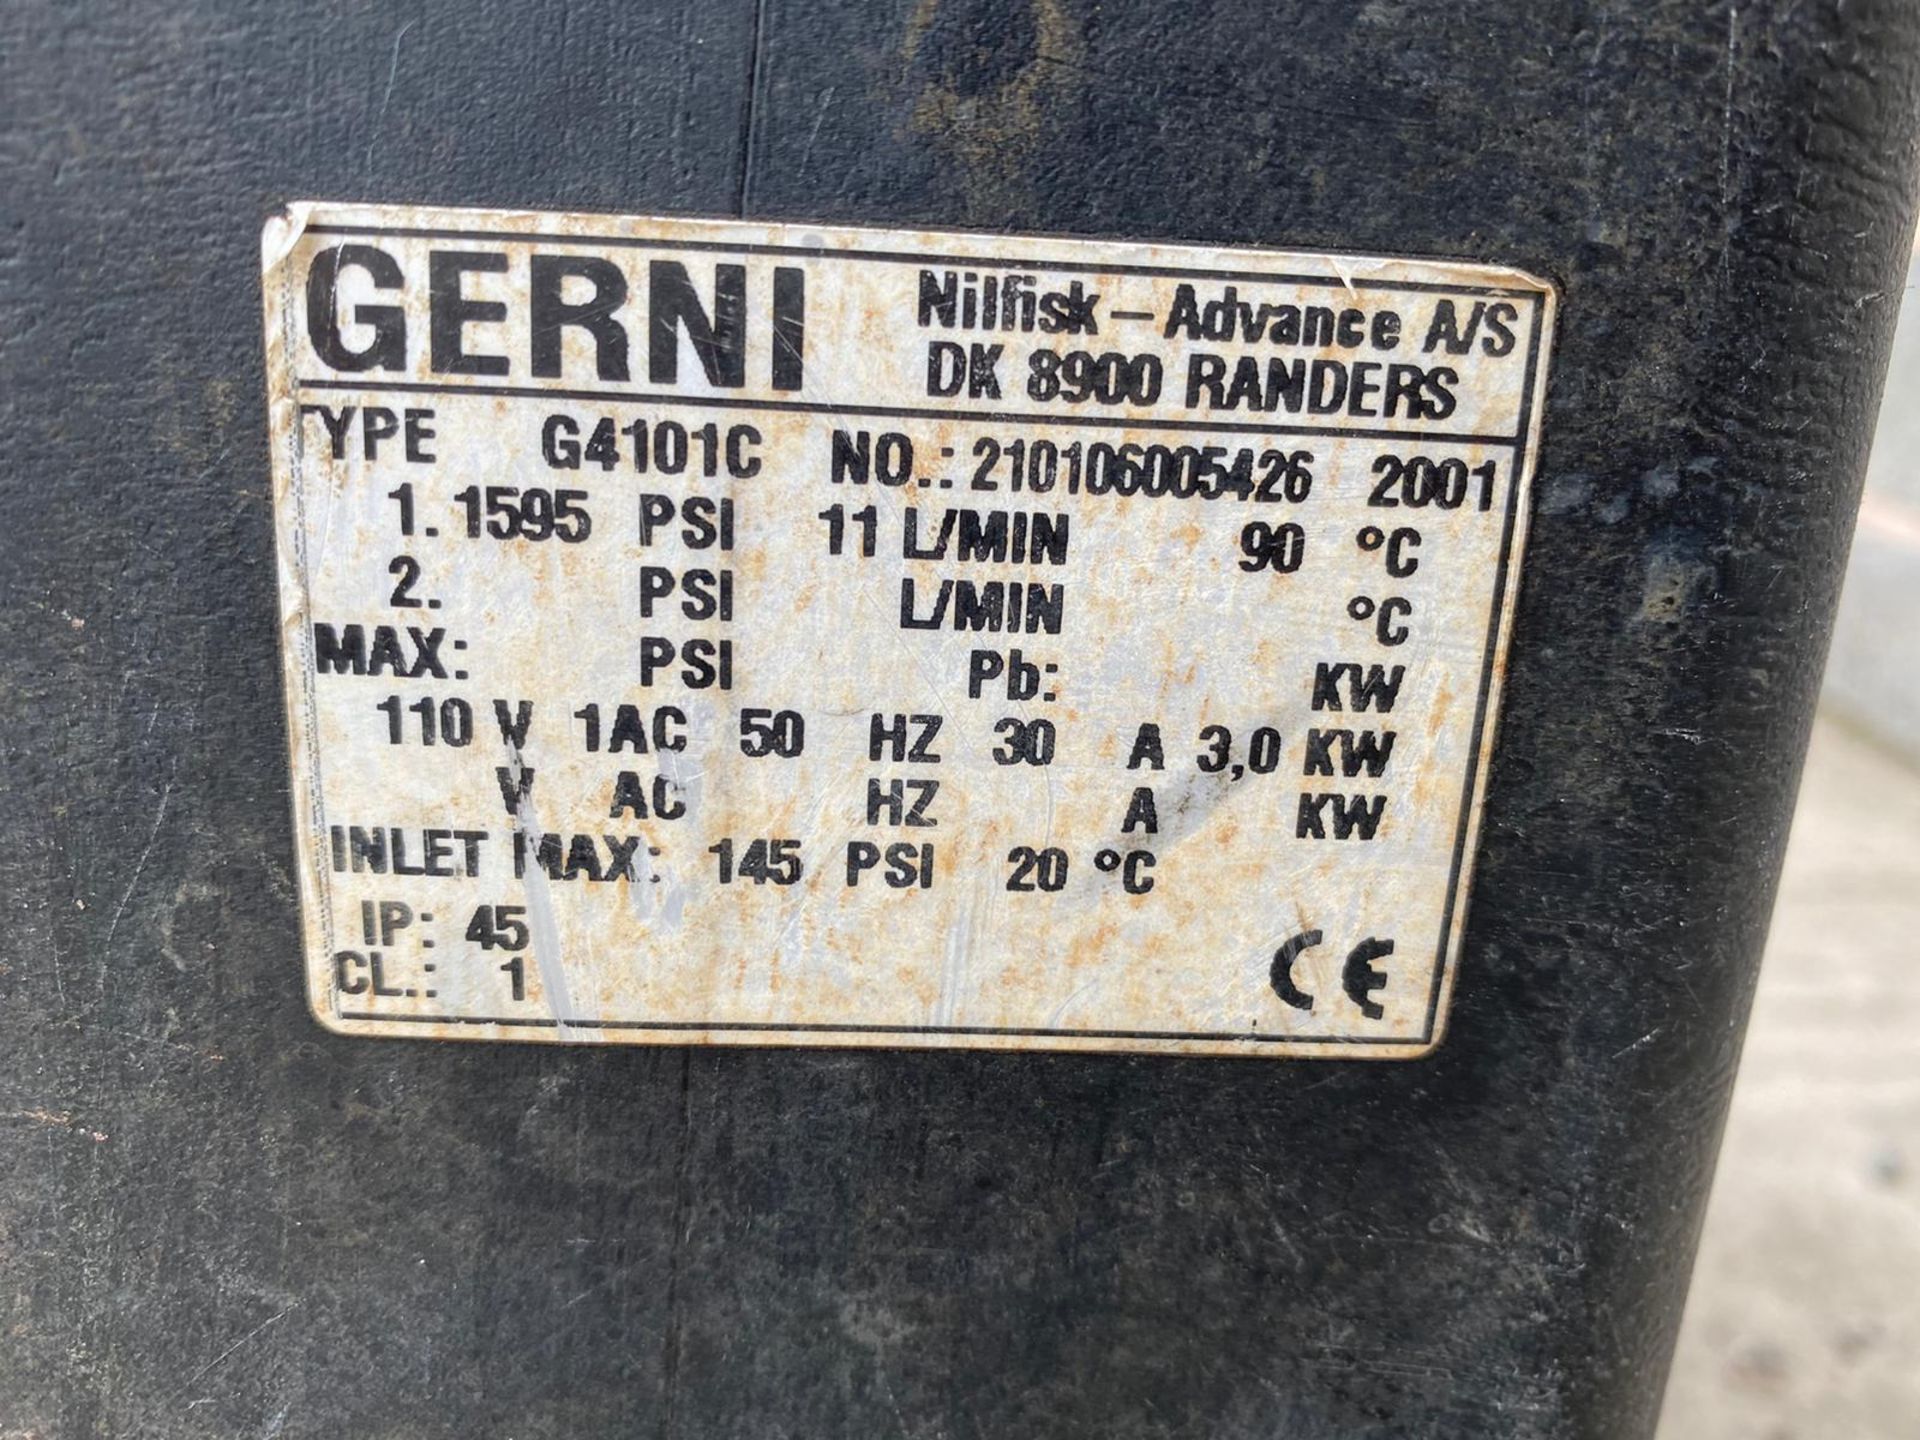 Gerni 410C Diesel Pressure Washer Steam Cleaner - Image 3 of 4